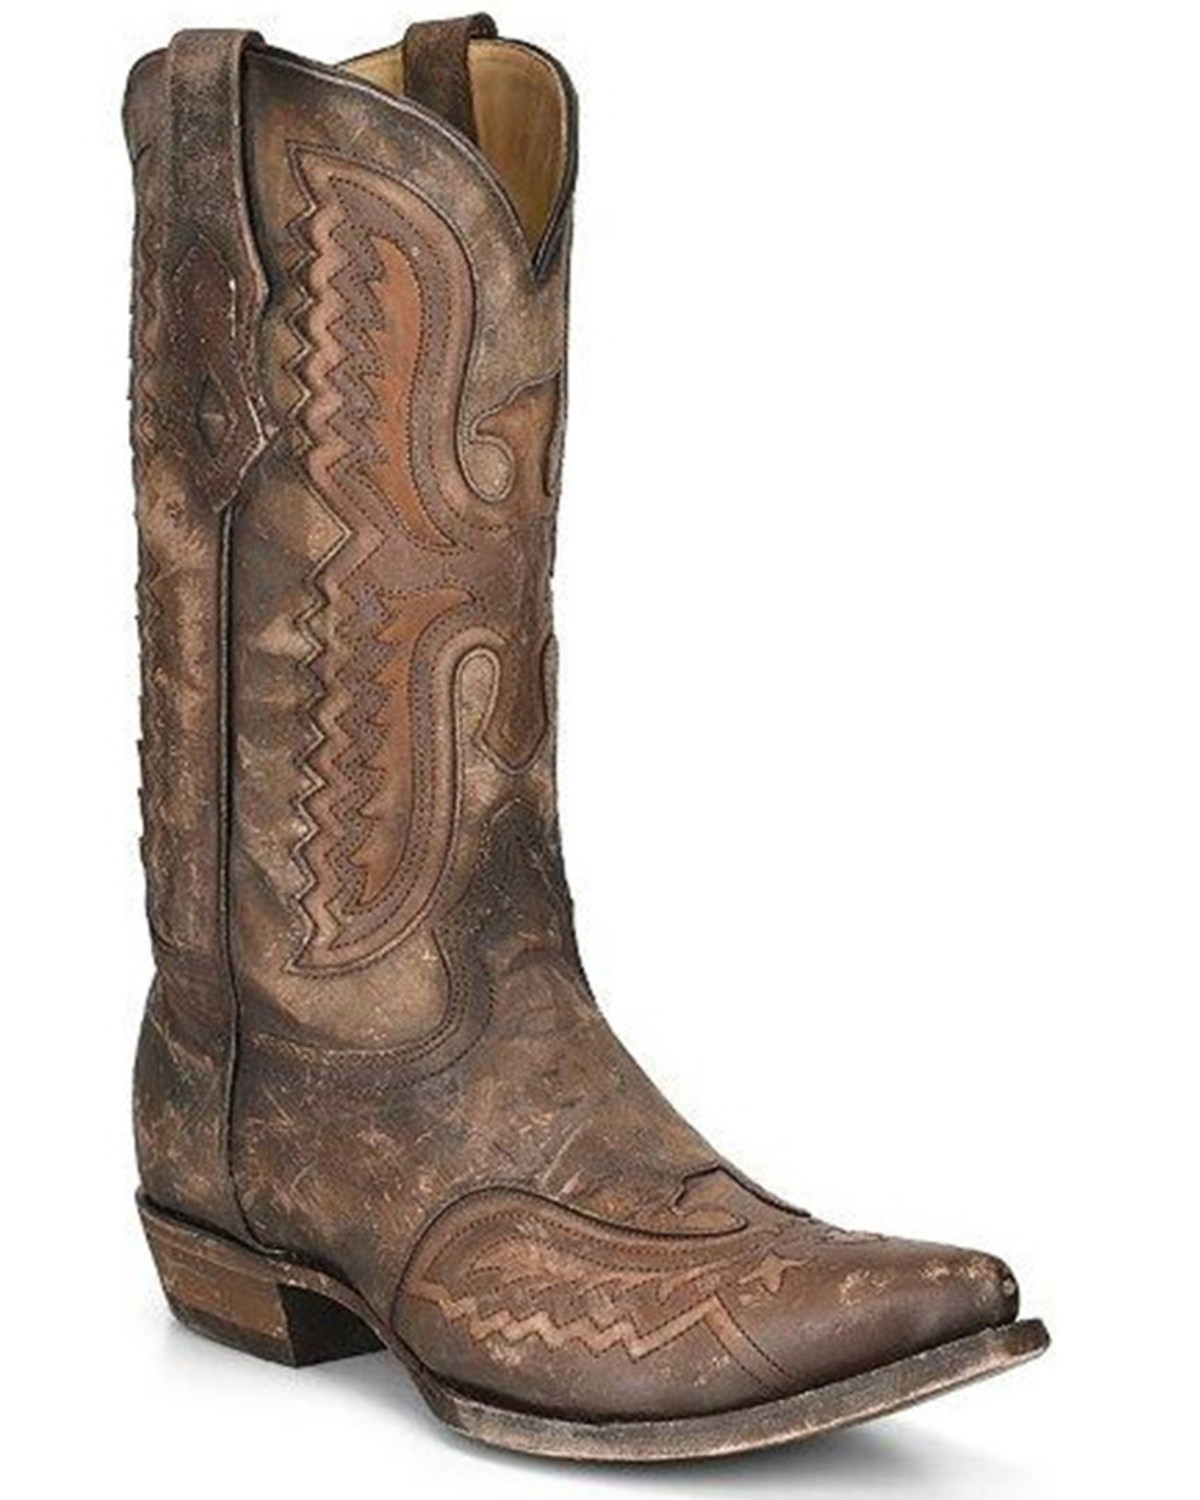 Corral Men's Western Boots - Snip Toe